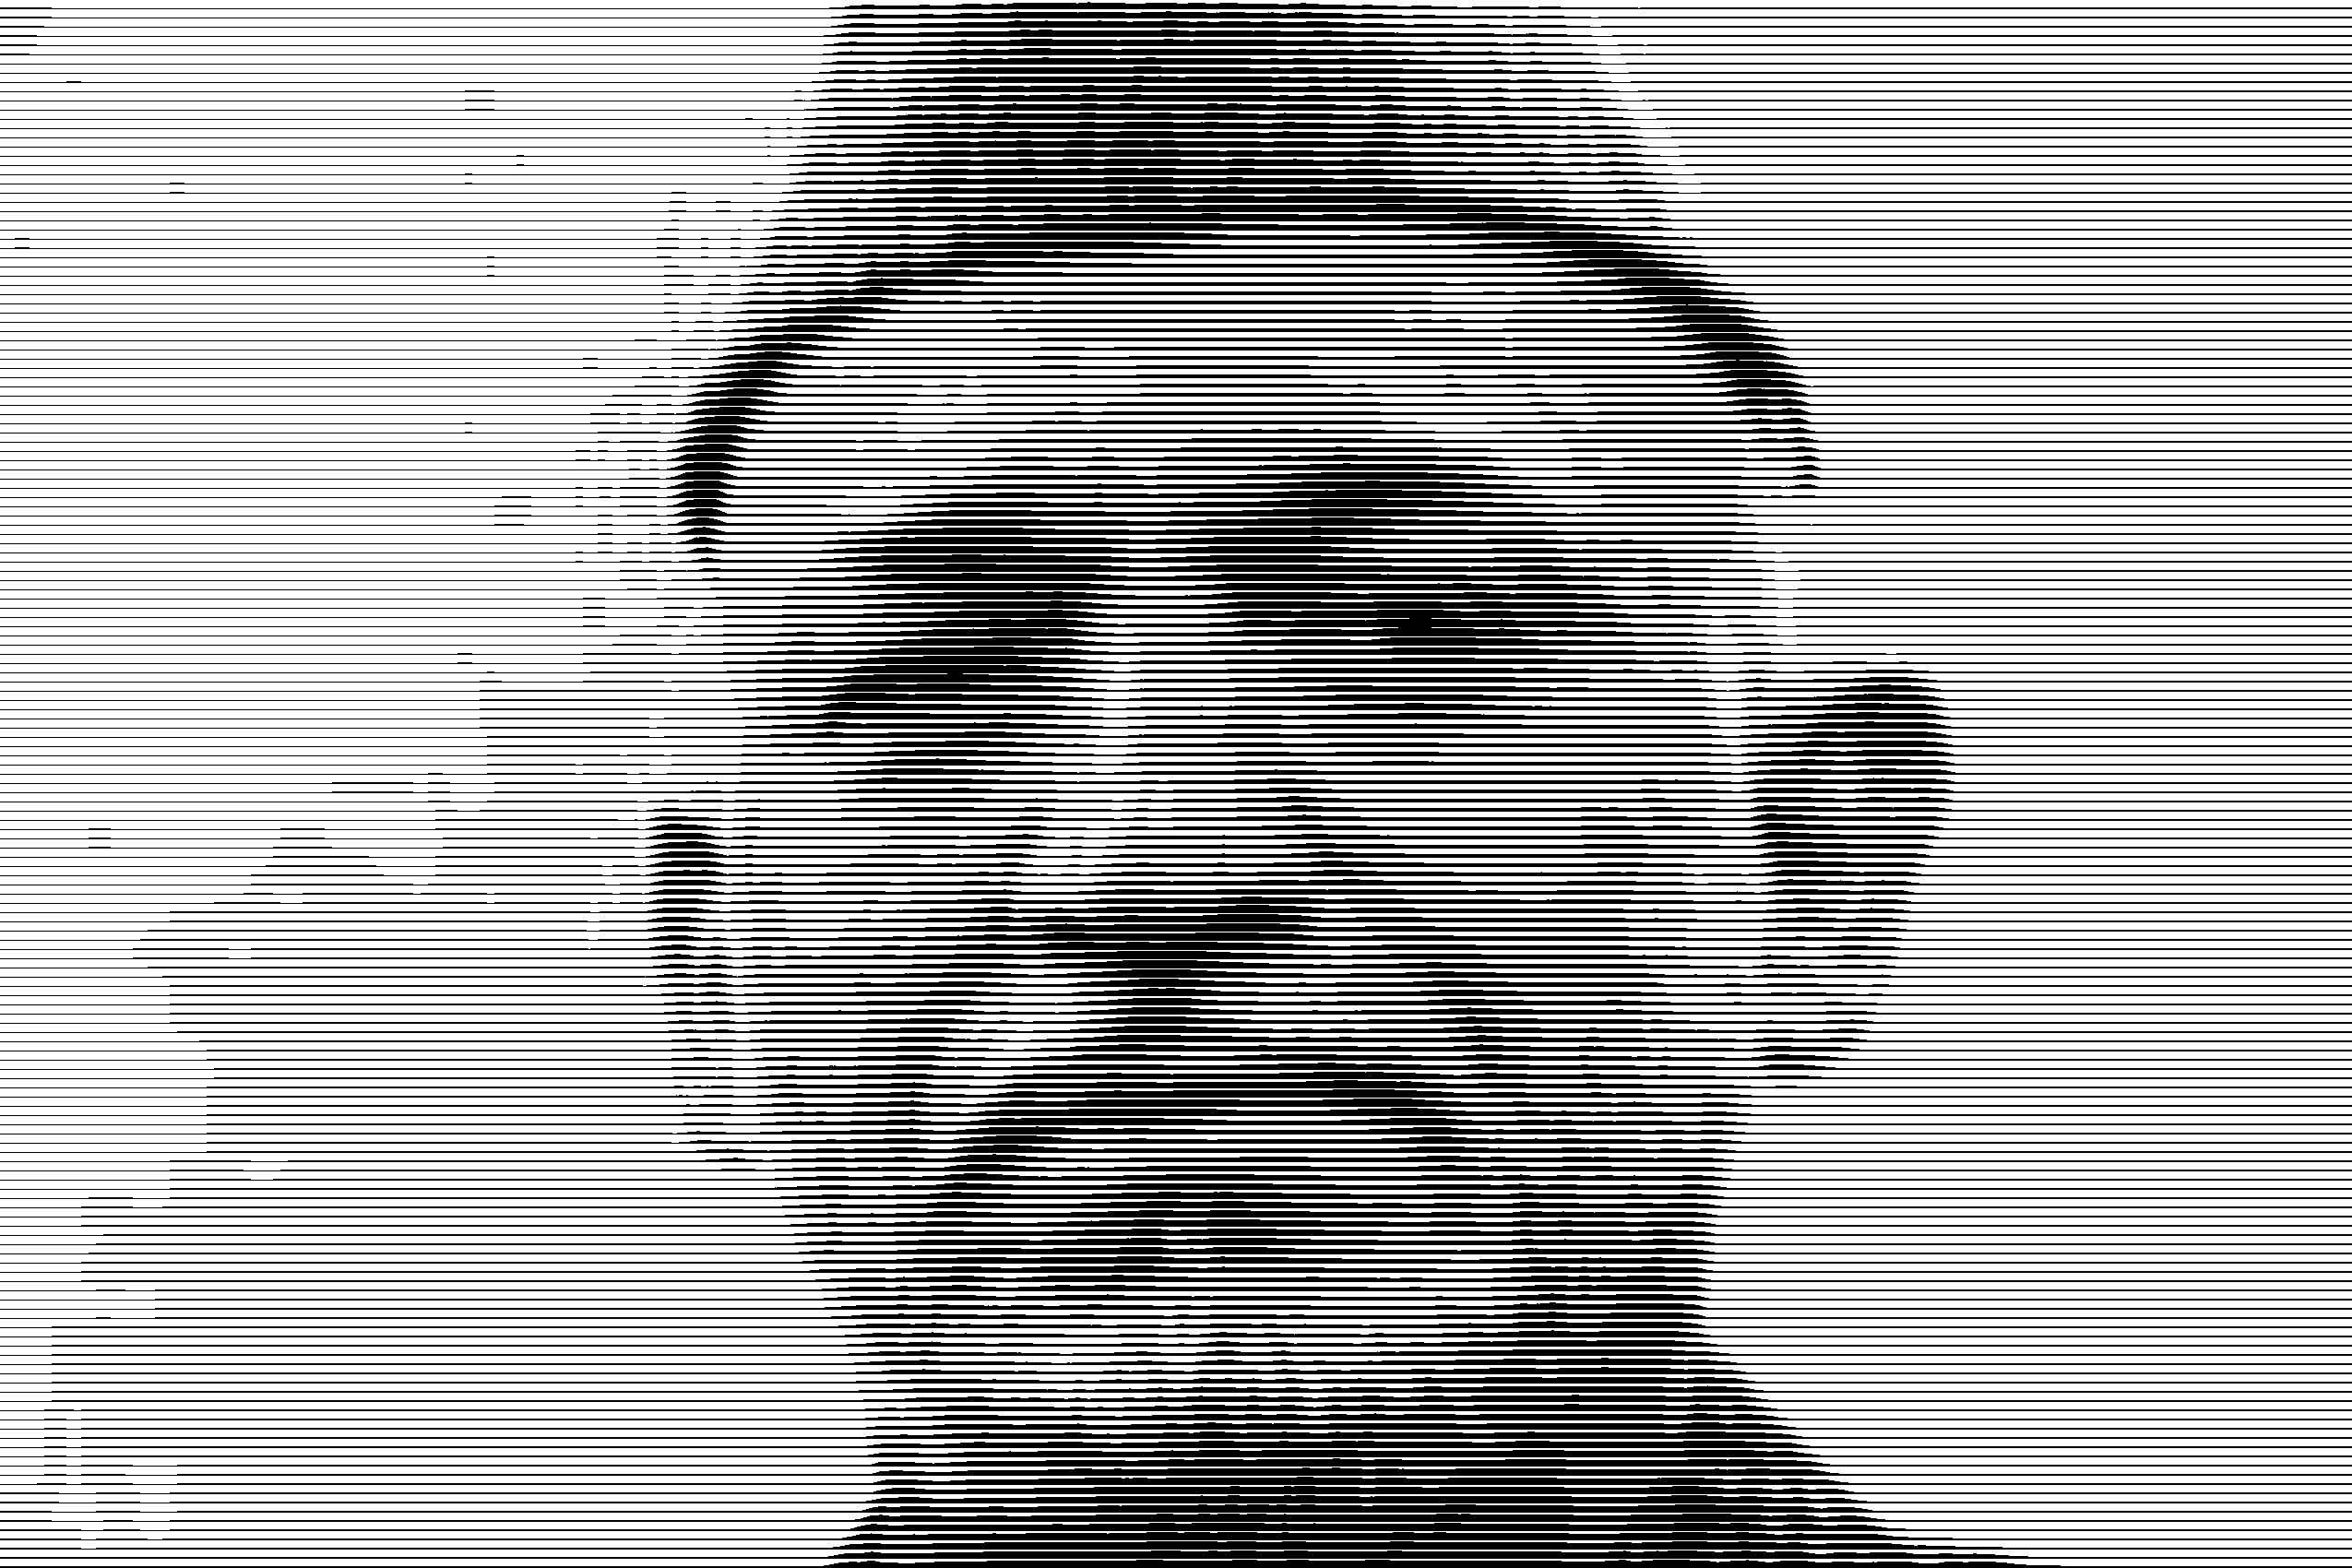 Karzai Hamid